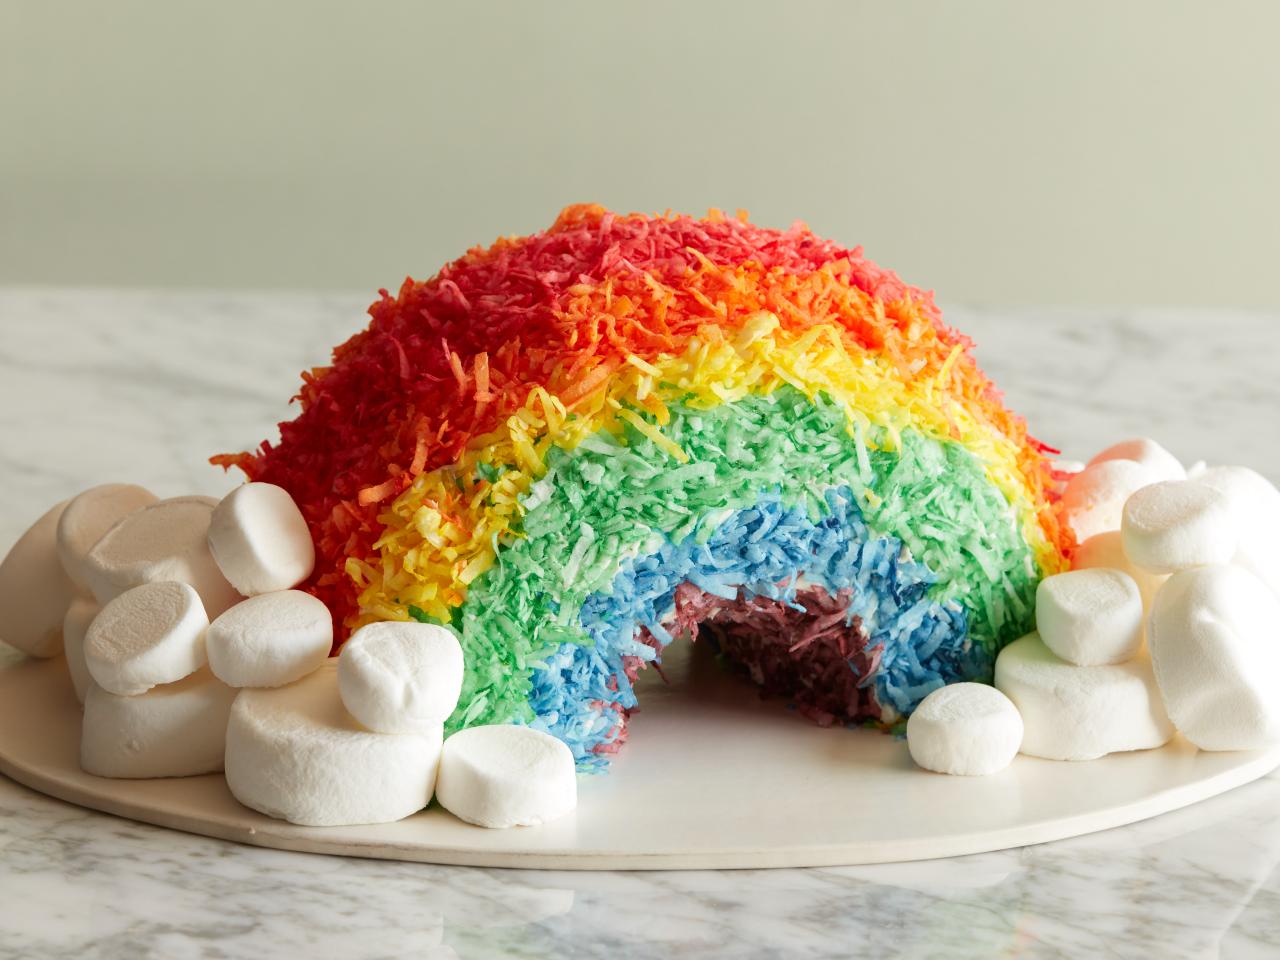 Rainbow Bundt Cake - Recipe Girl®